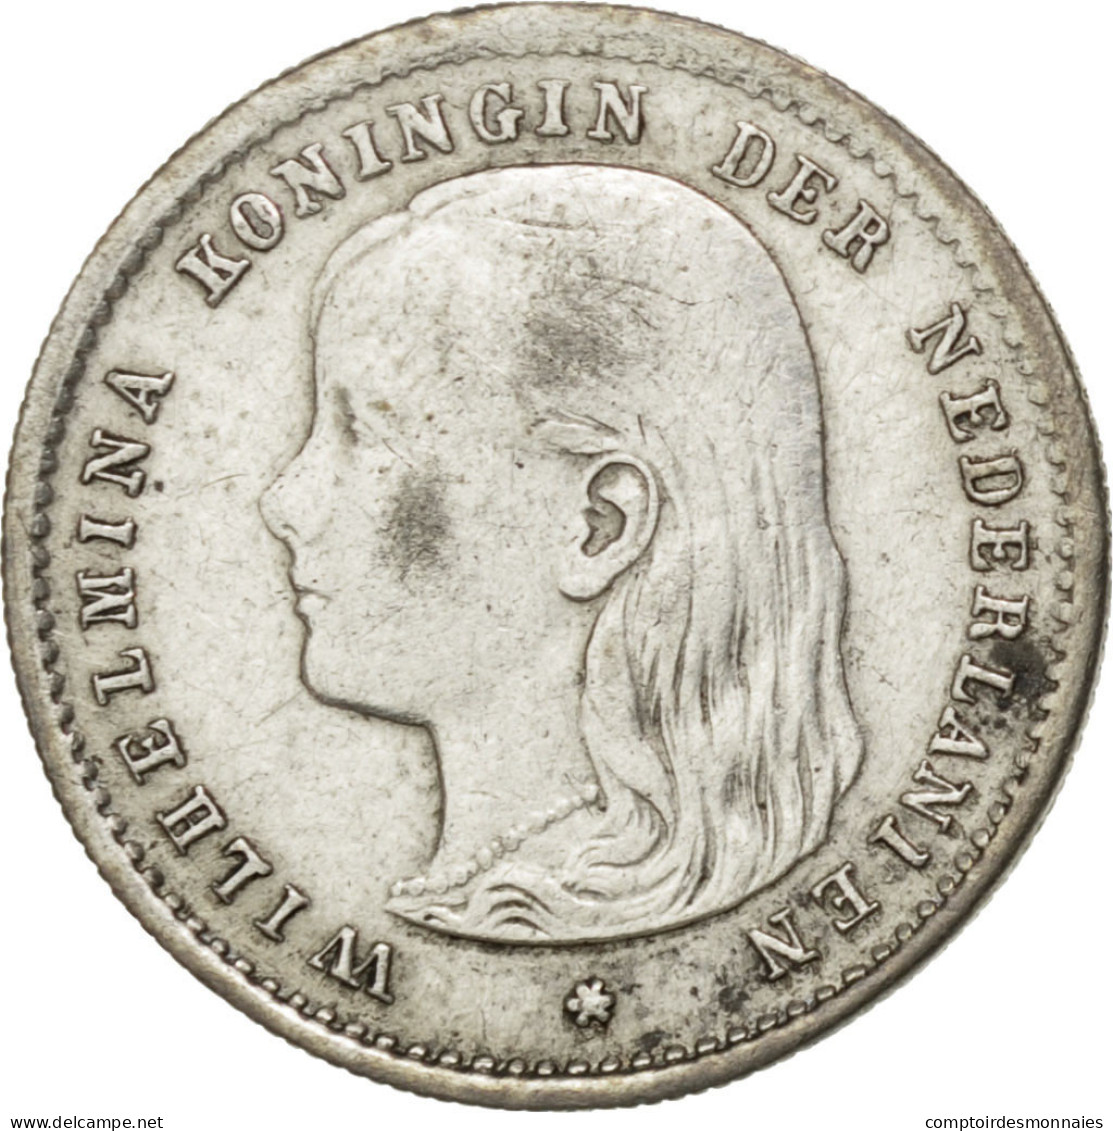 Monnaie, Pays-Bas, Wilhelmina I, 10 Cents, 1896, TTB+, Argent, KM:116 - 10 Cent